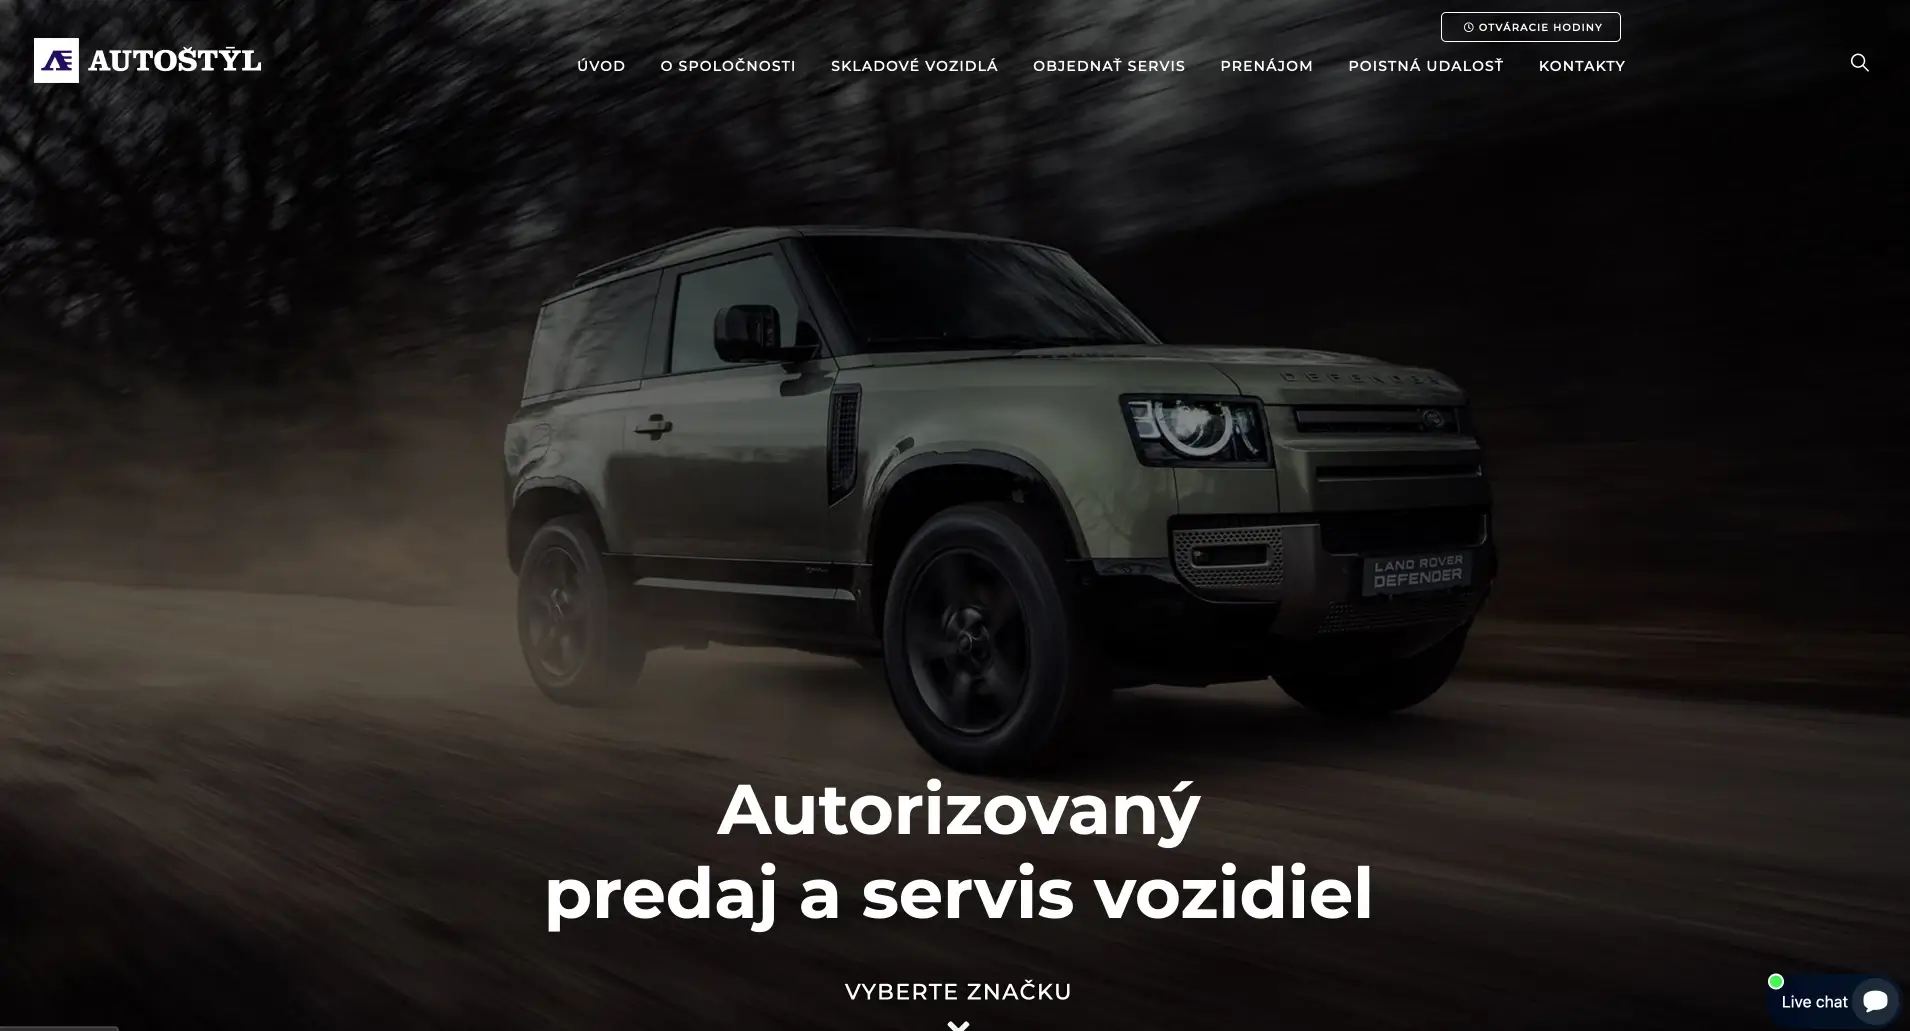 Autoštýl - Authorized car dealership and service center